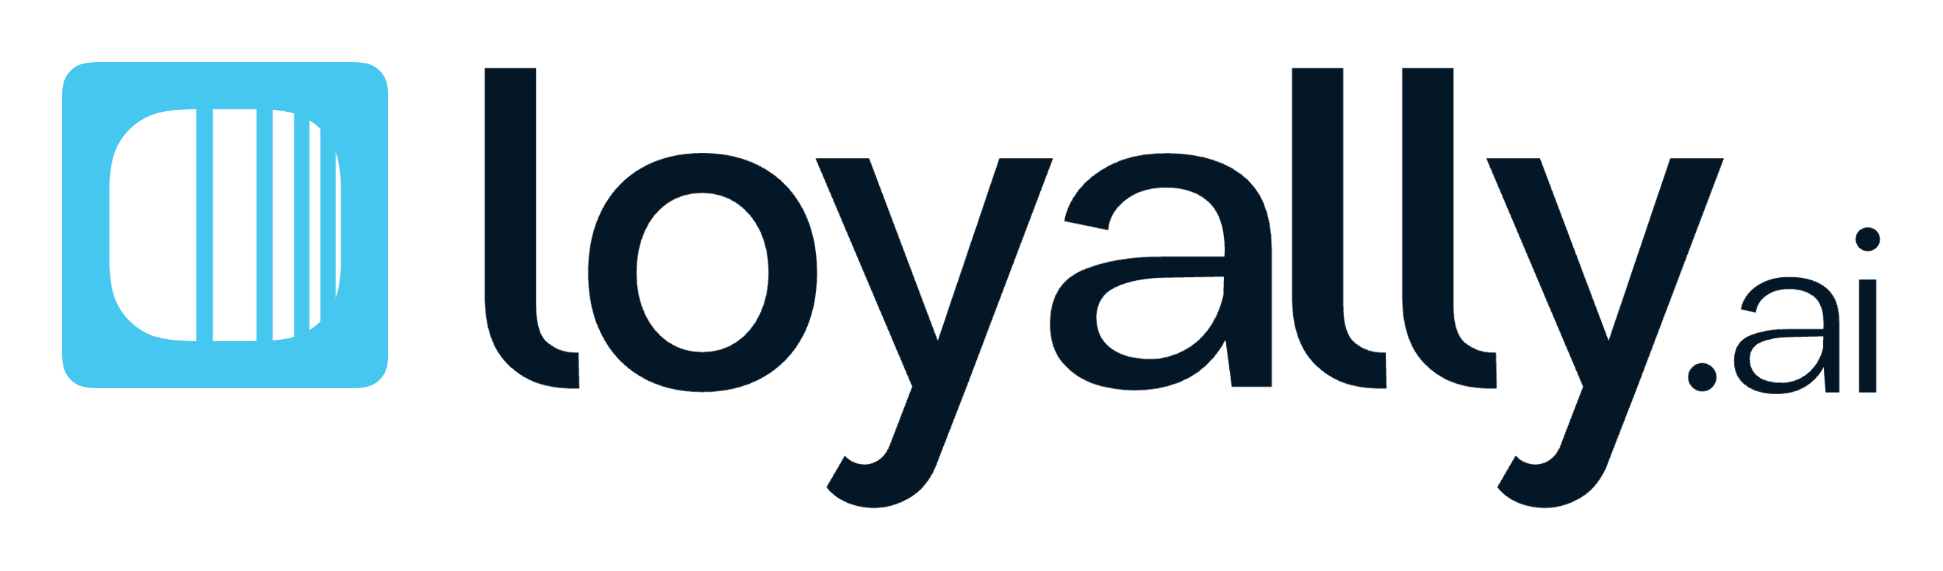 Loyally.ai Blog | Customer Loyalty, Digital Rewards, CRM Strategies, and Business Growth Insights